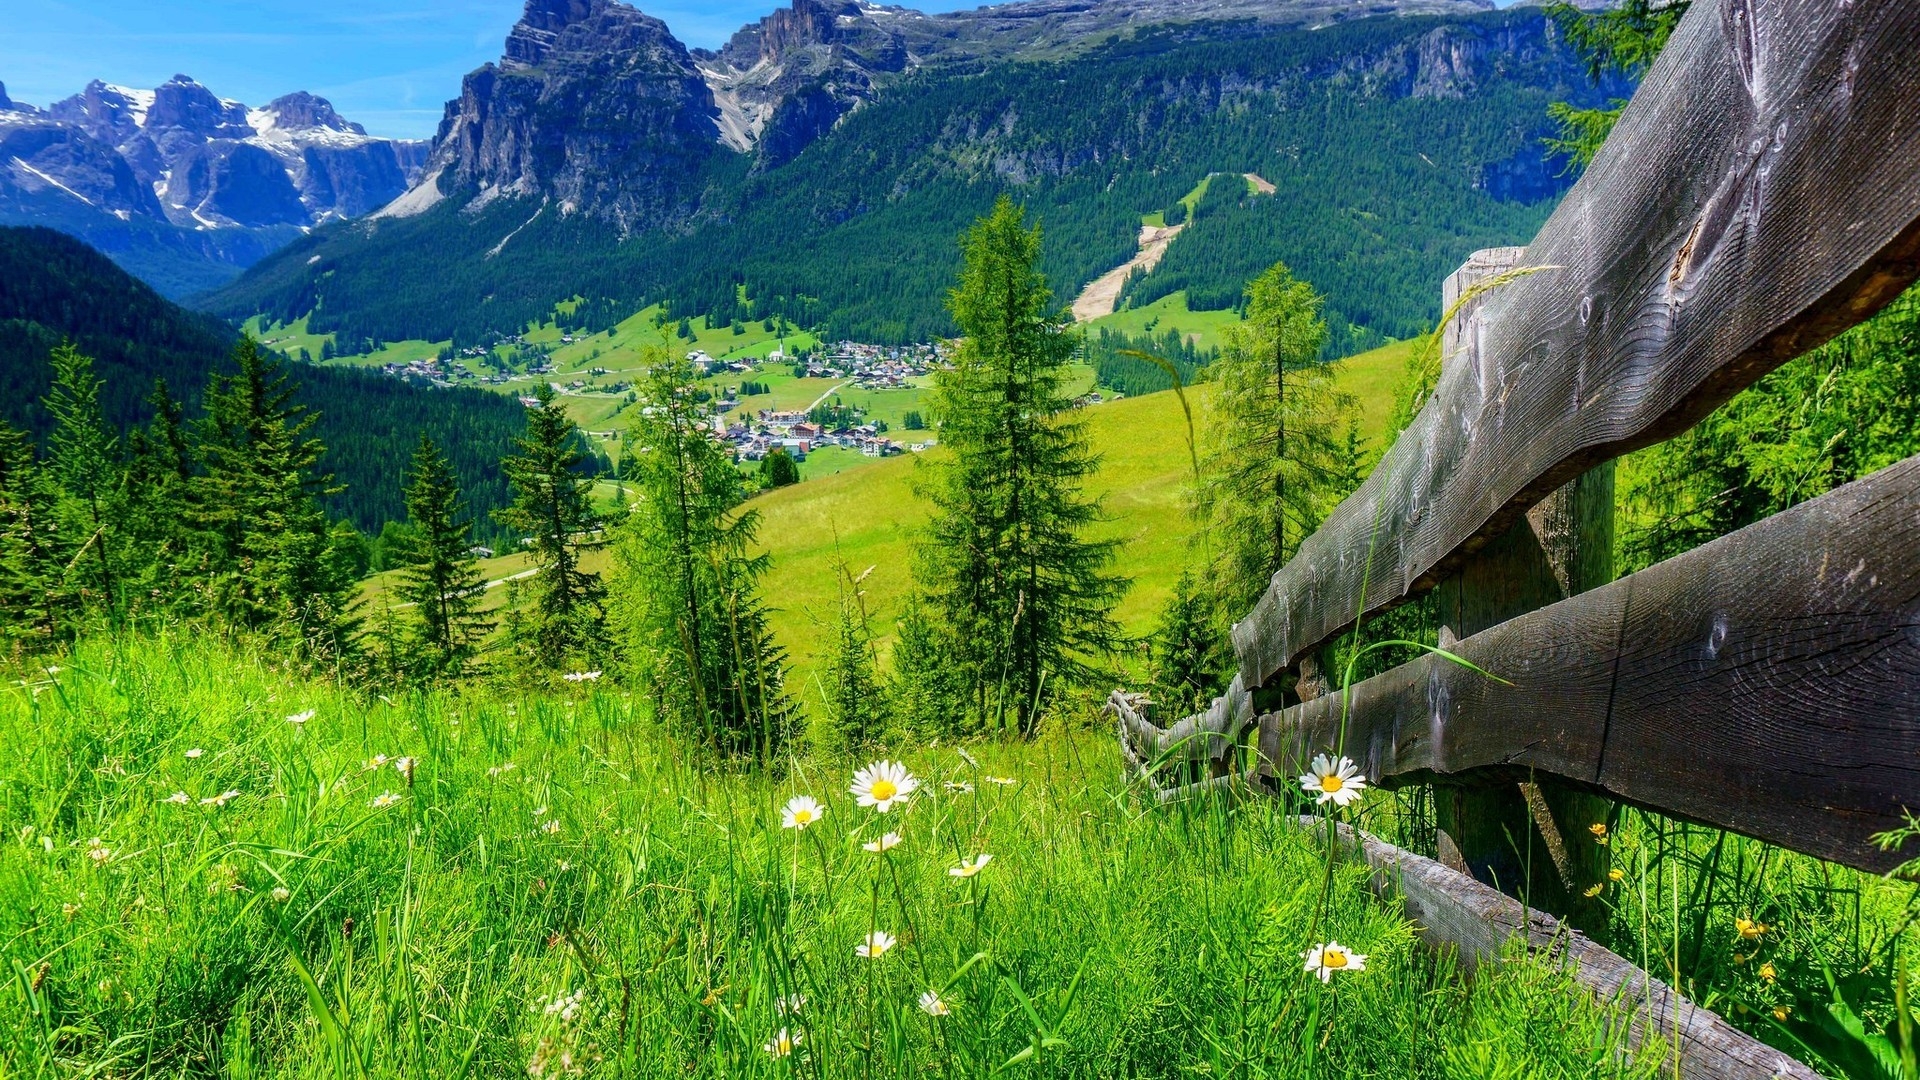 Spring Mountain Landscape Desktop Pc And Mac Wallpaper